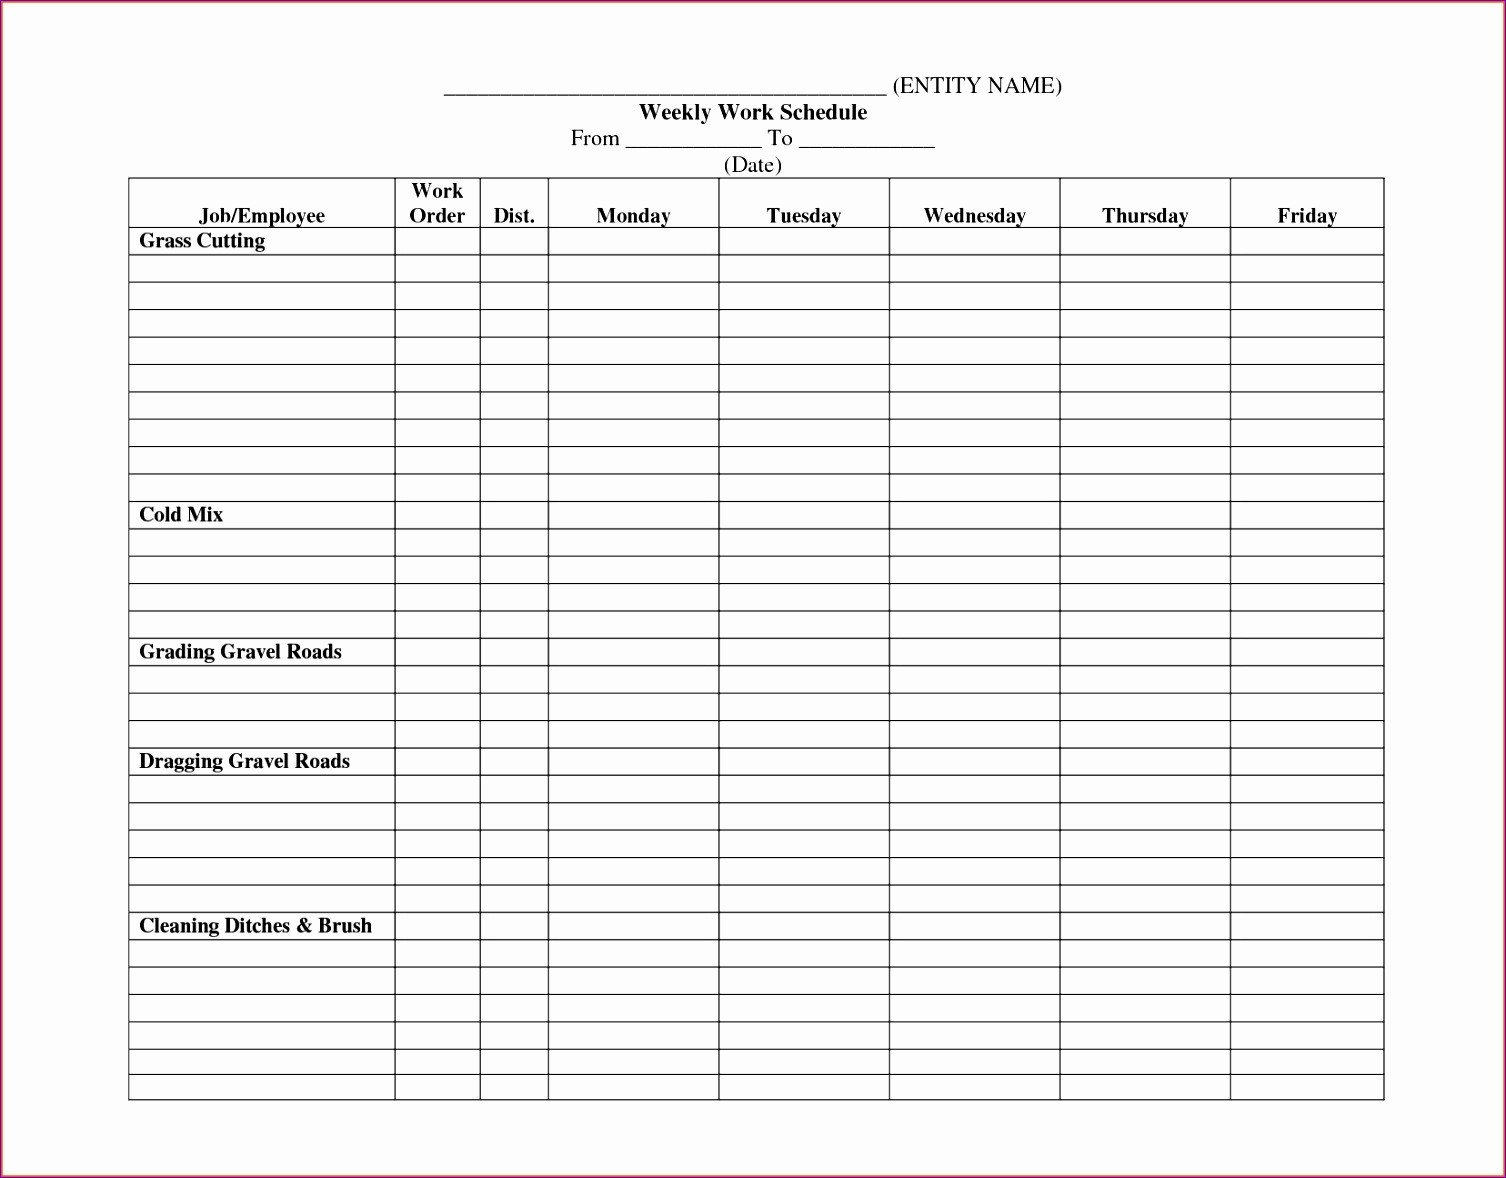 Staffing Plan Template Excel 12 Staffing Schedule Template Excel Free Exceltemplates